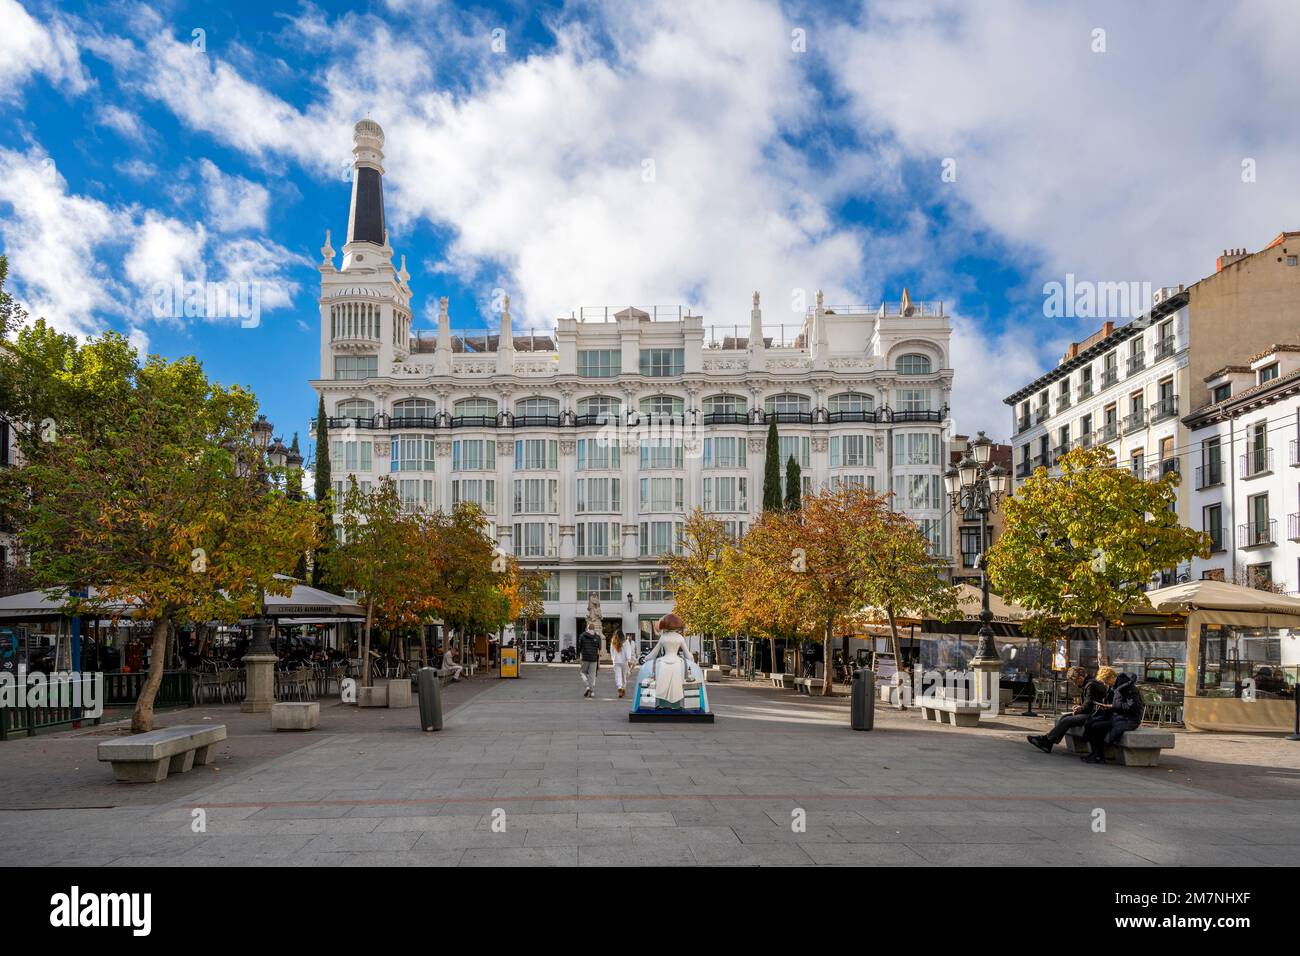 Plaza de Santa Ana, Madrid, Espagne Banque D'Images